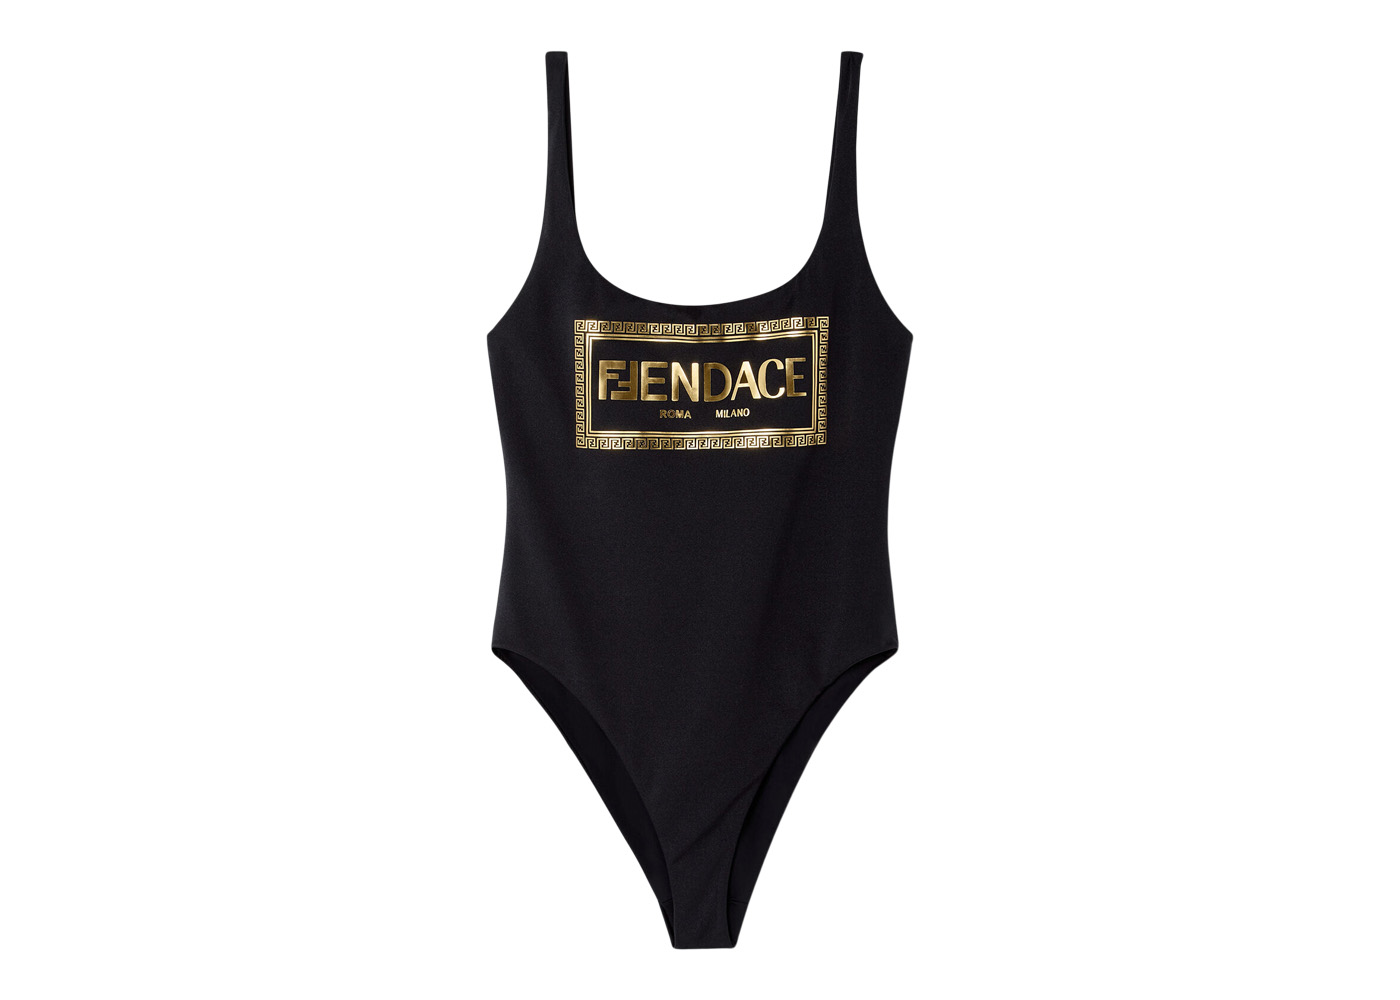 Fendi Fendace Logo One-Piece Swimsuit Black/Gold - SS22 - US